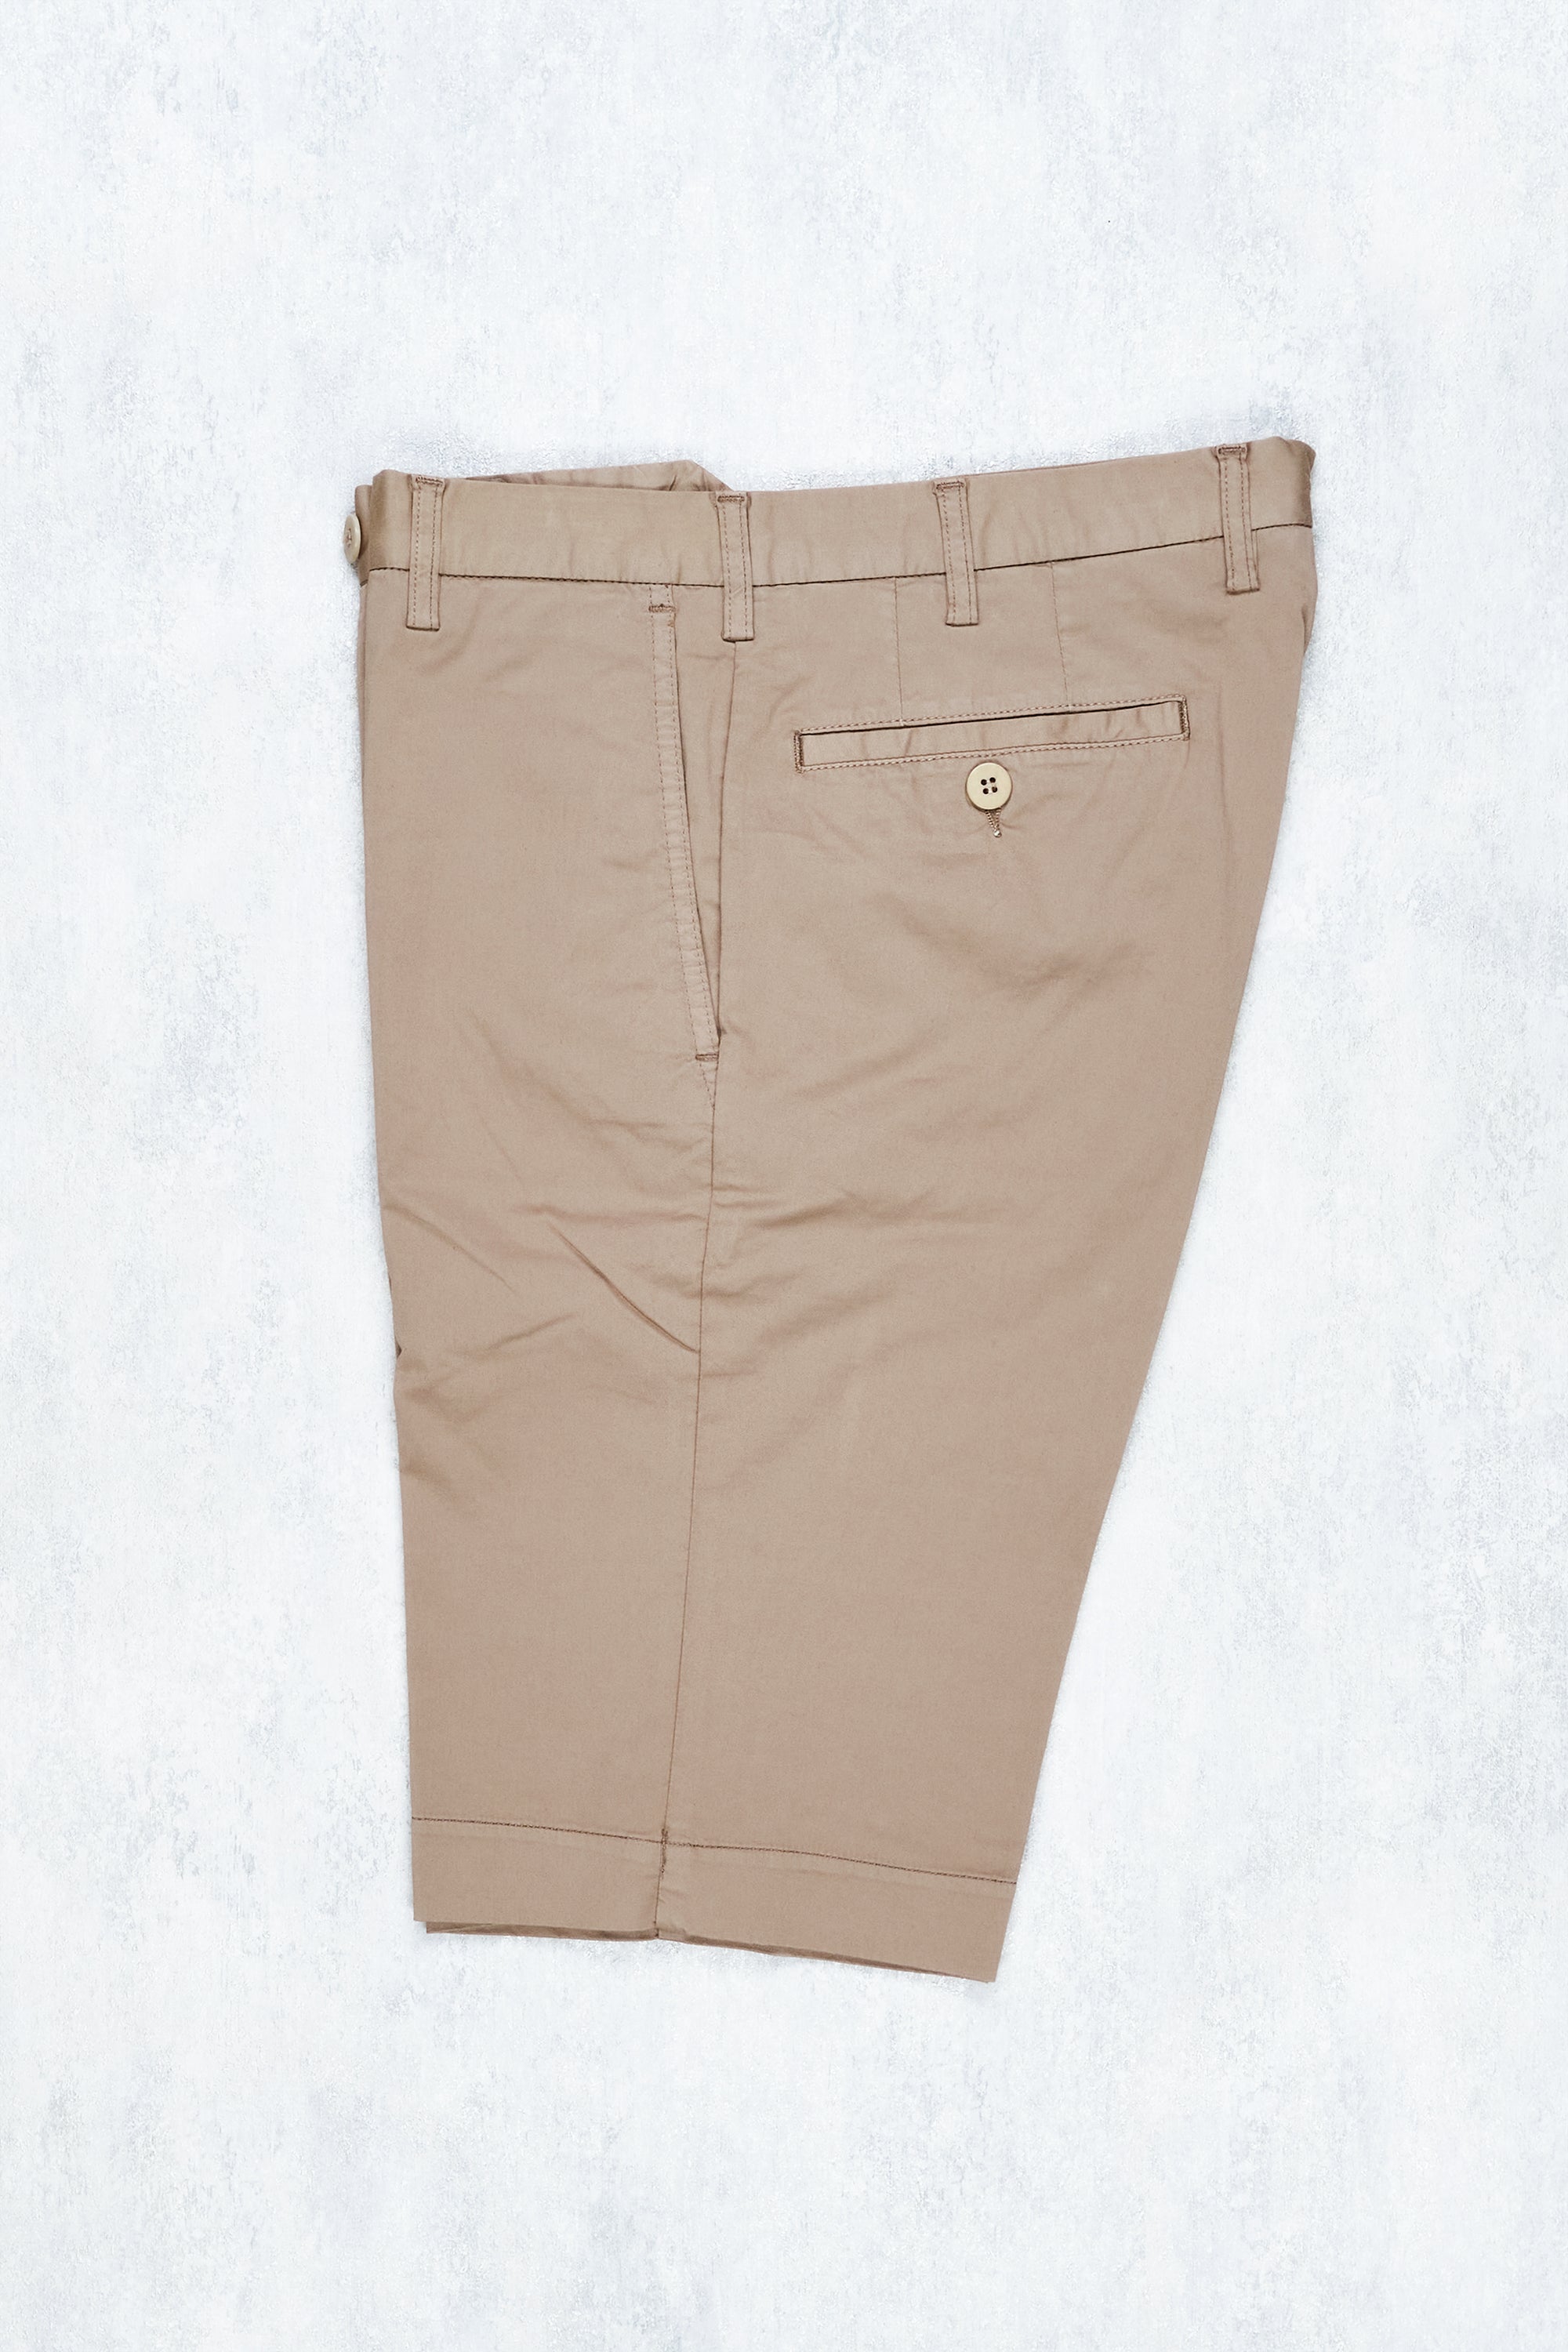 Rota	BE290/2 Brown Cotton Shorts